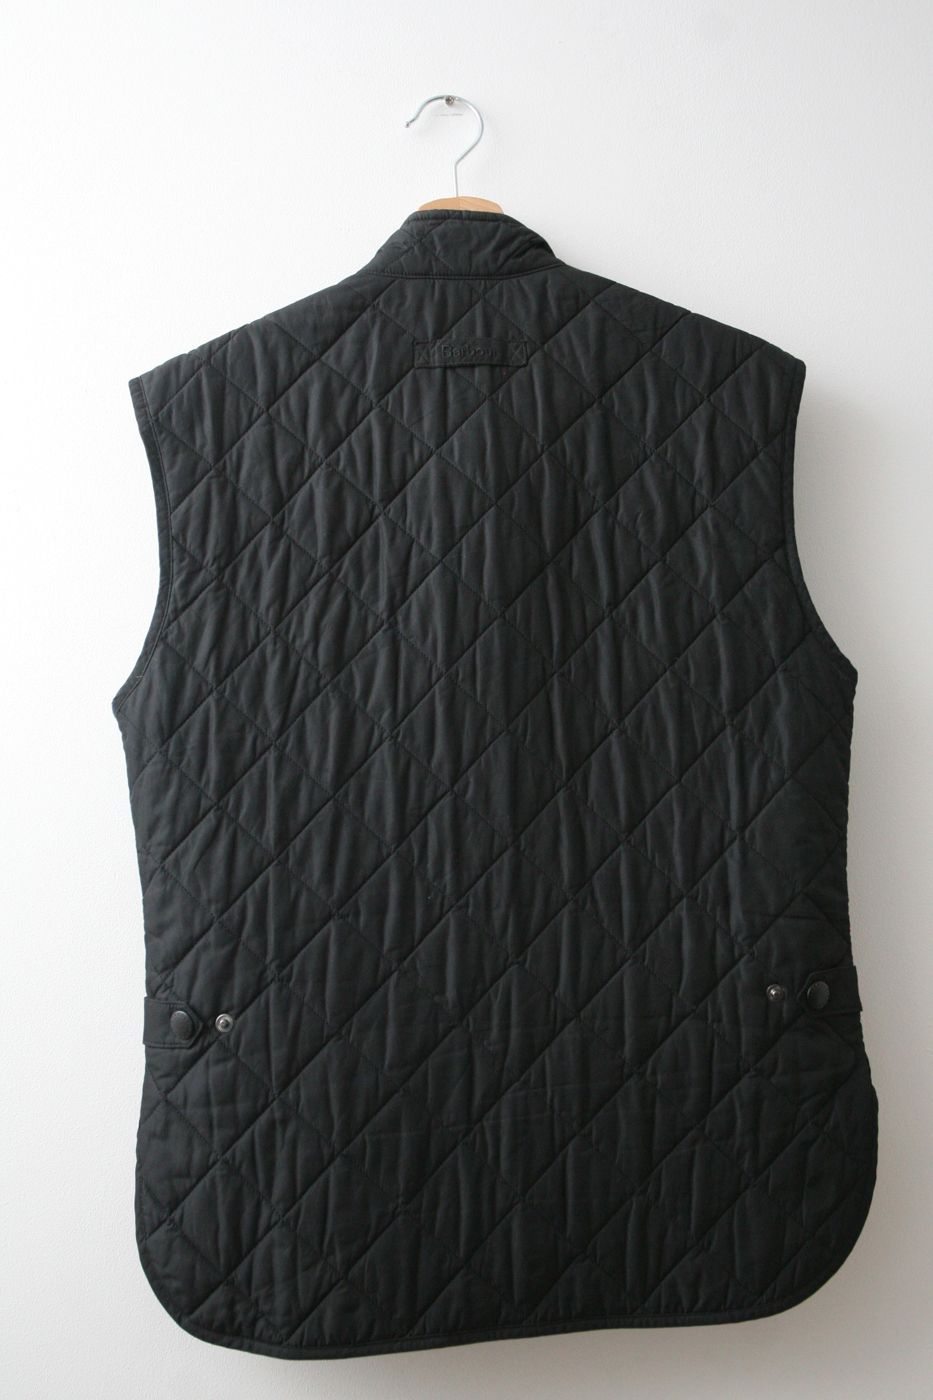 Barbour Barbour England Lowerdale Black Quilted Gilet Vest S Size US S / EU 44-46 / 1 - 6 Thumbnail